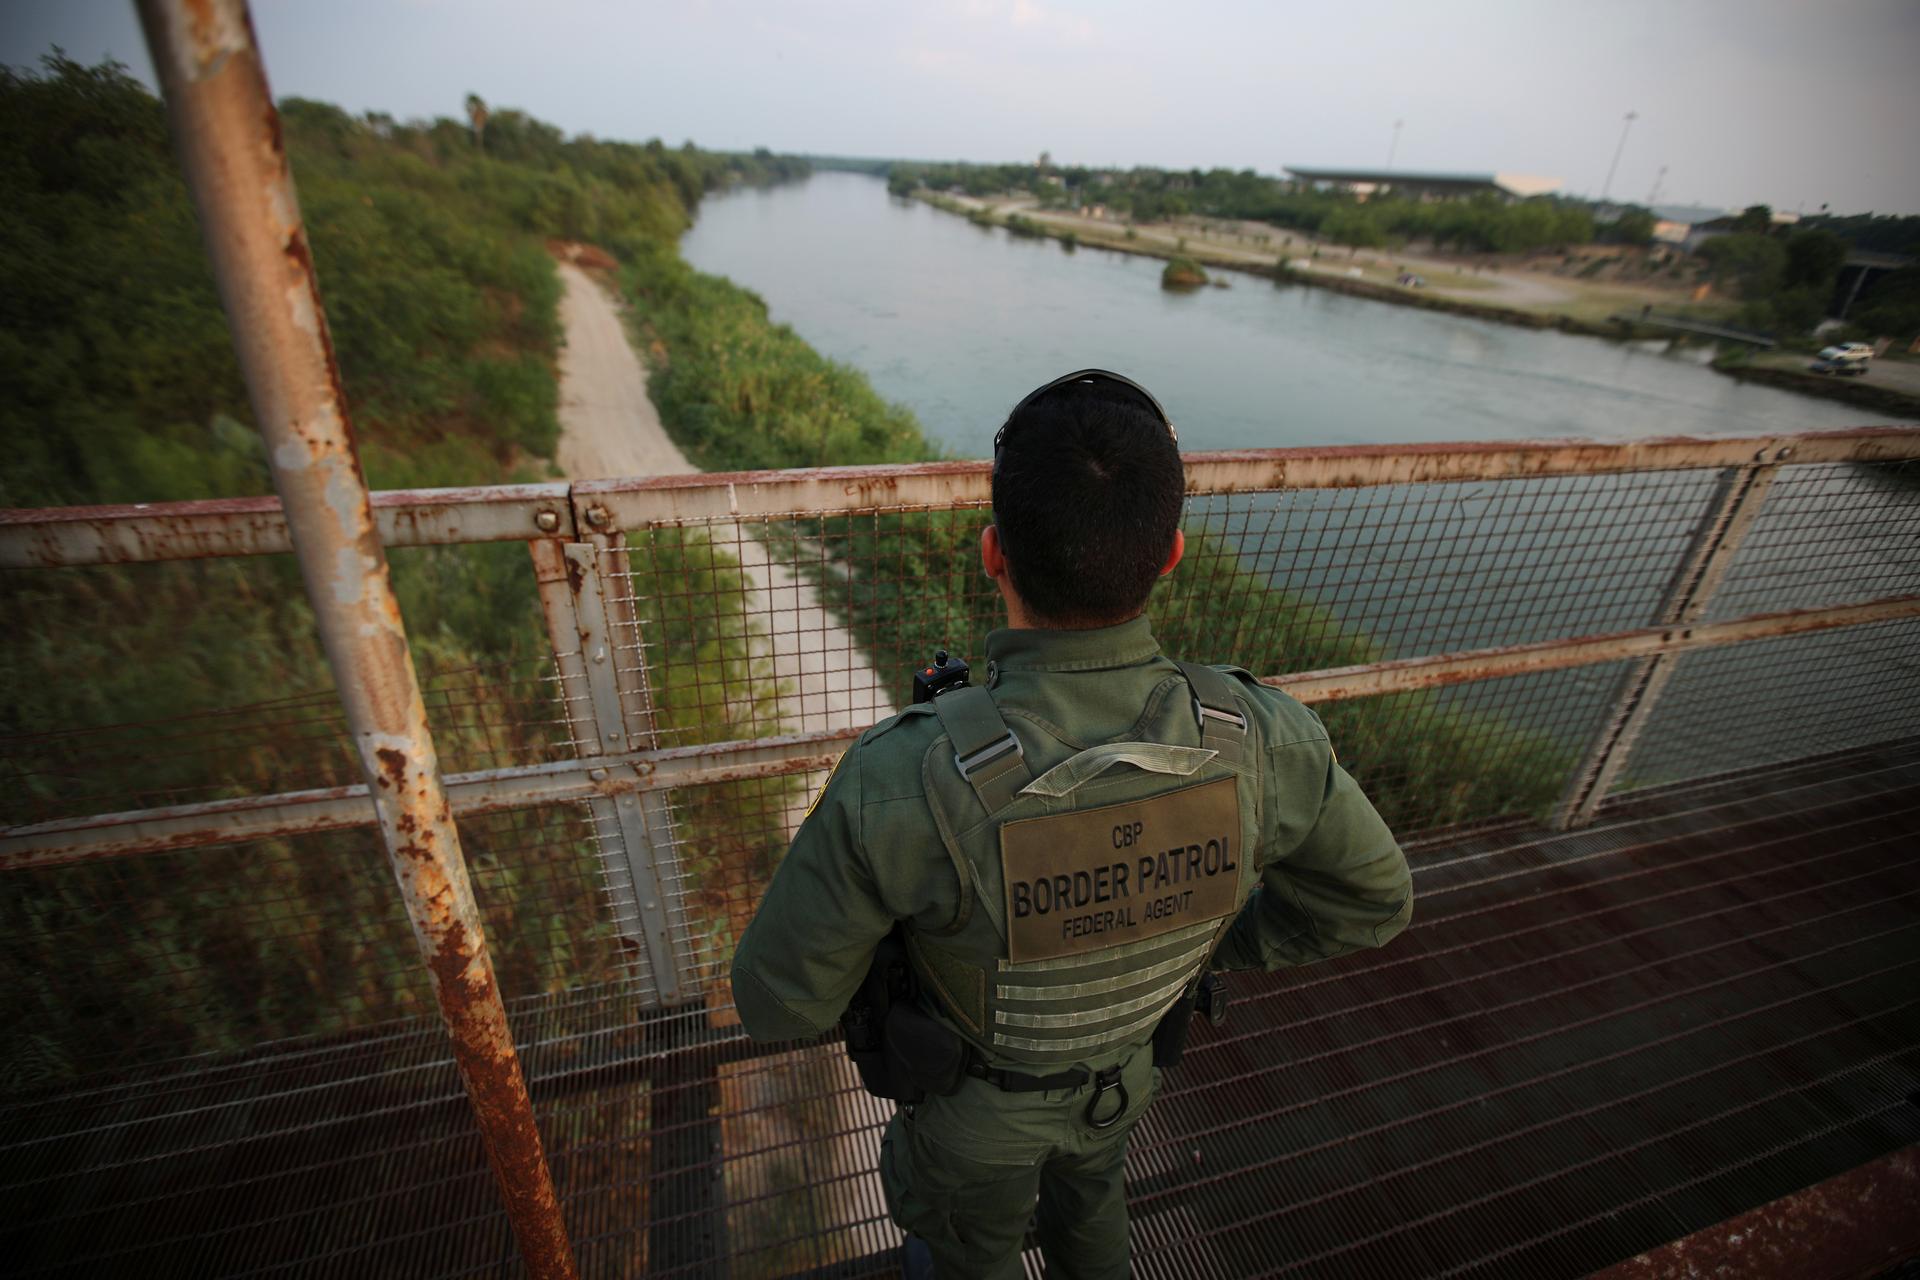 Agent in uniform stands on bridge looking over green river